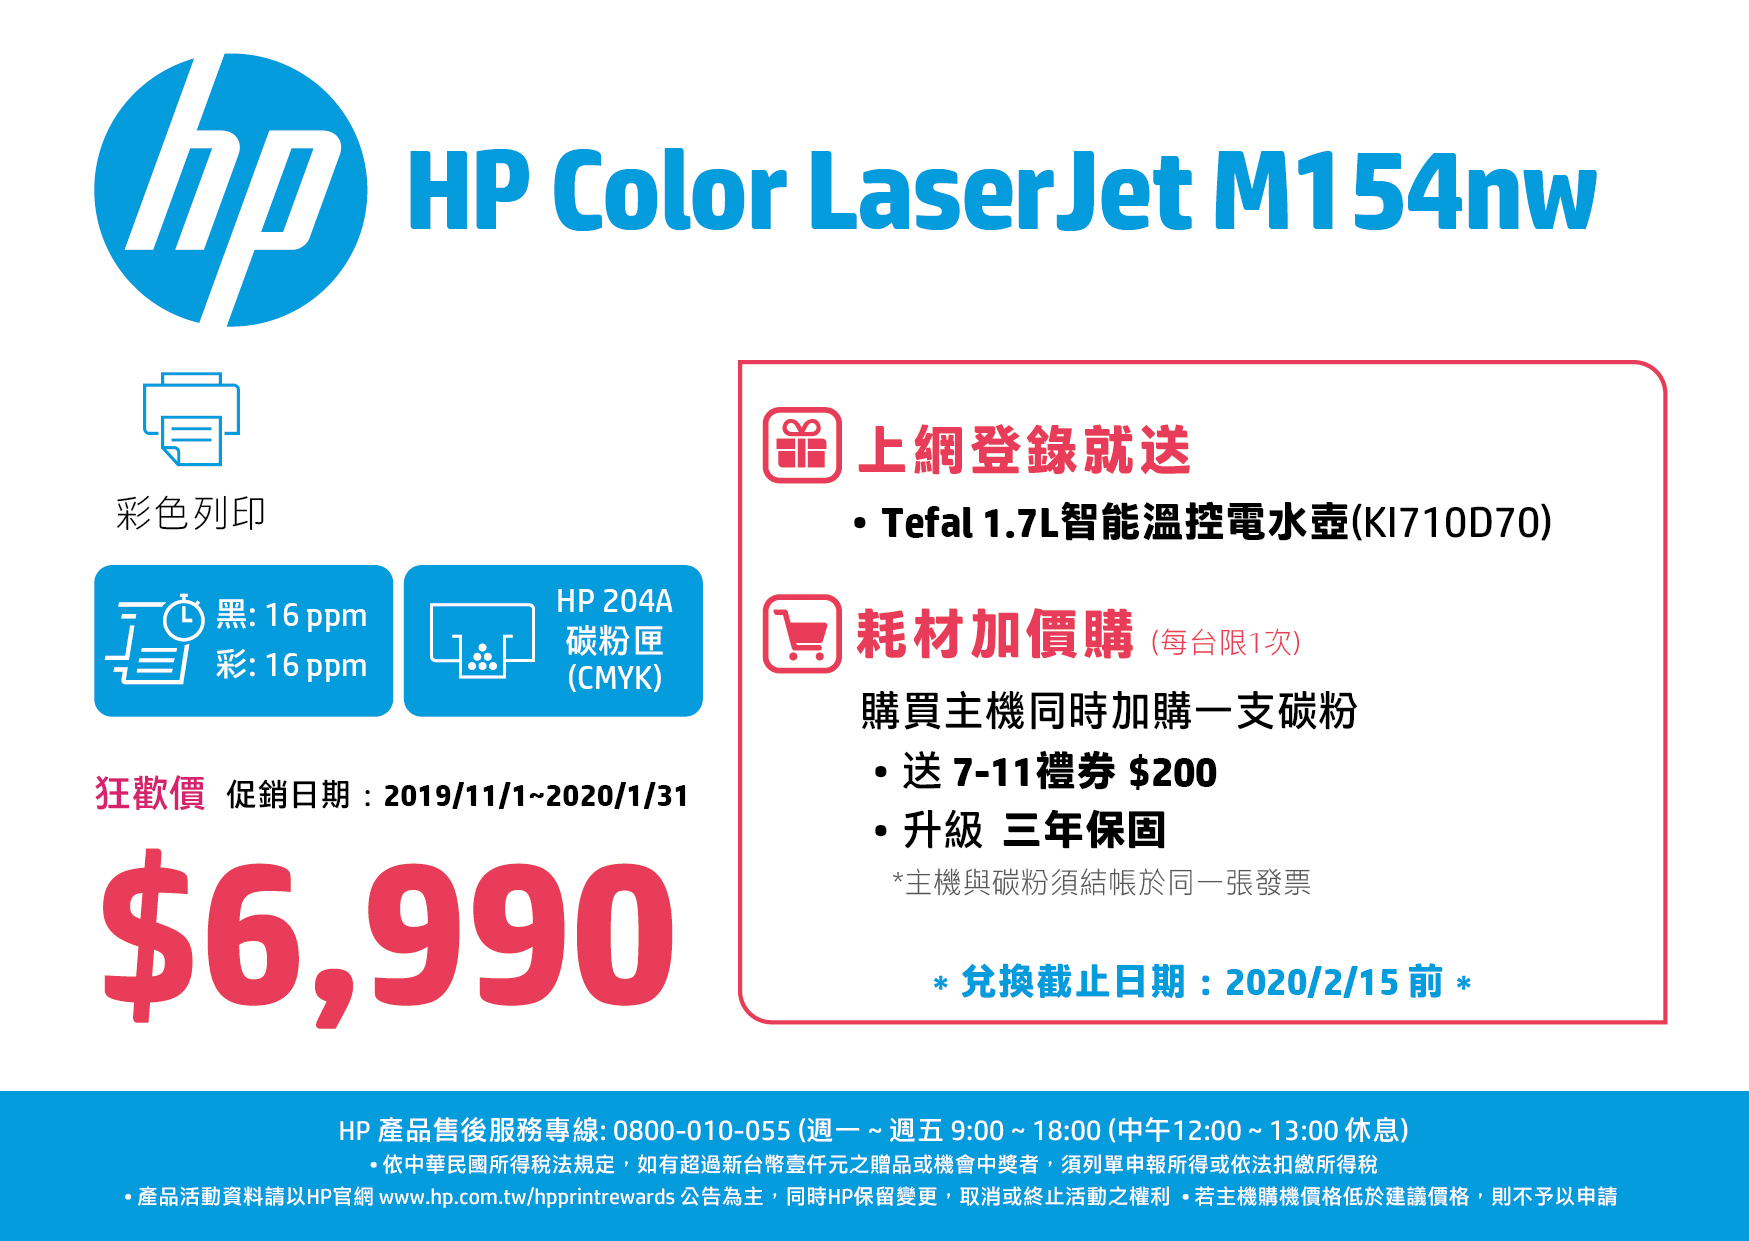 HP Color LaserJet Pro M154nw 彩色雷射印表機